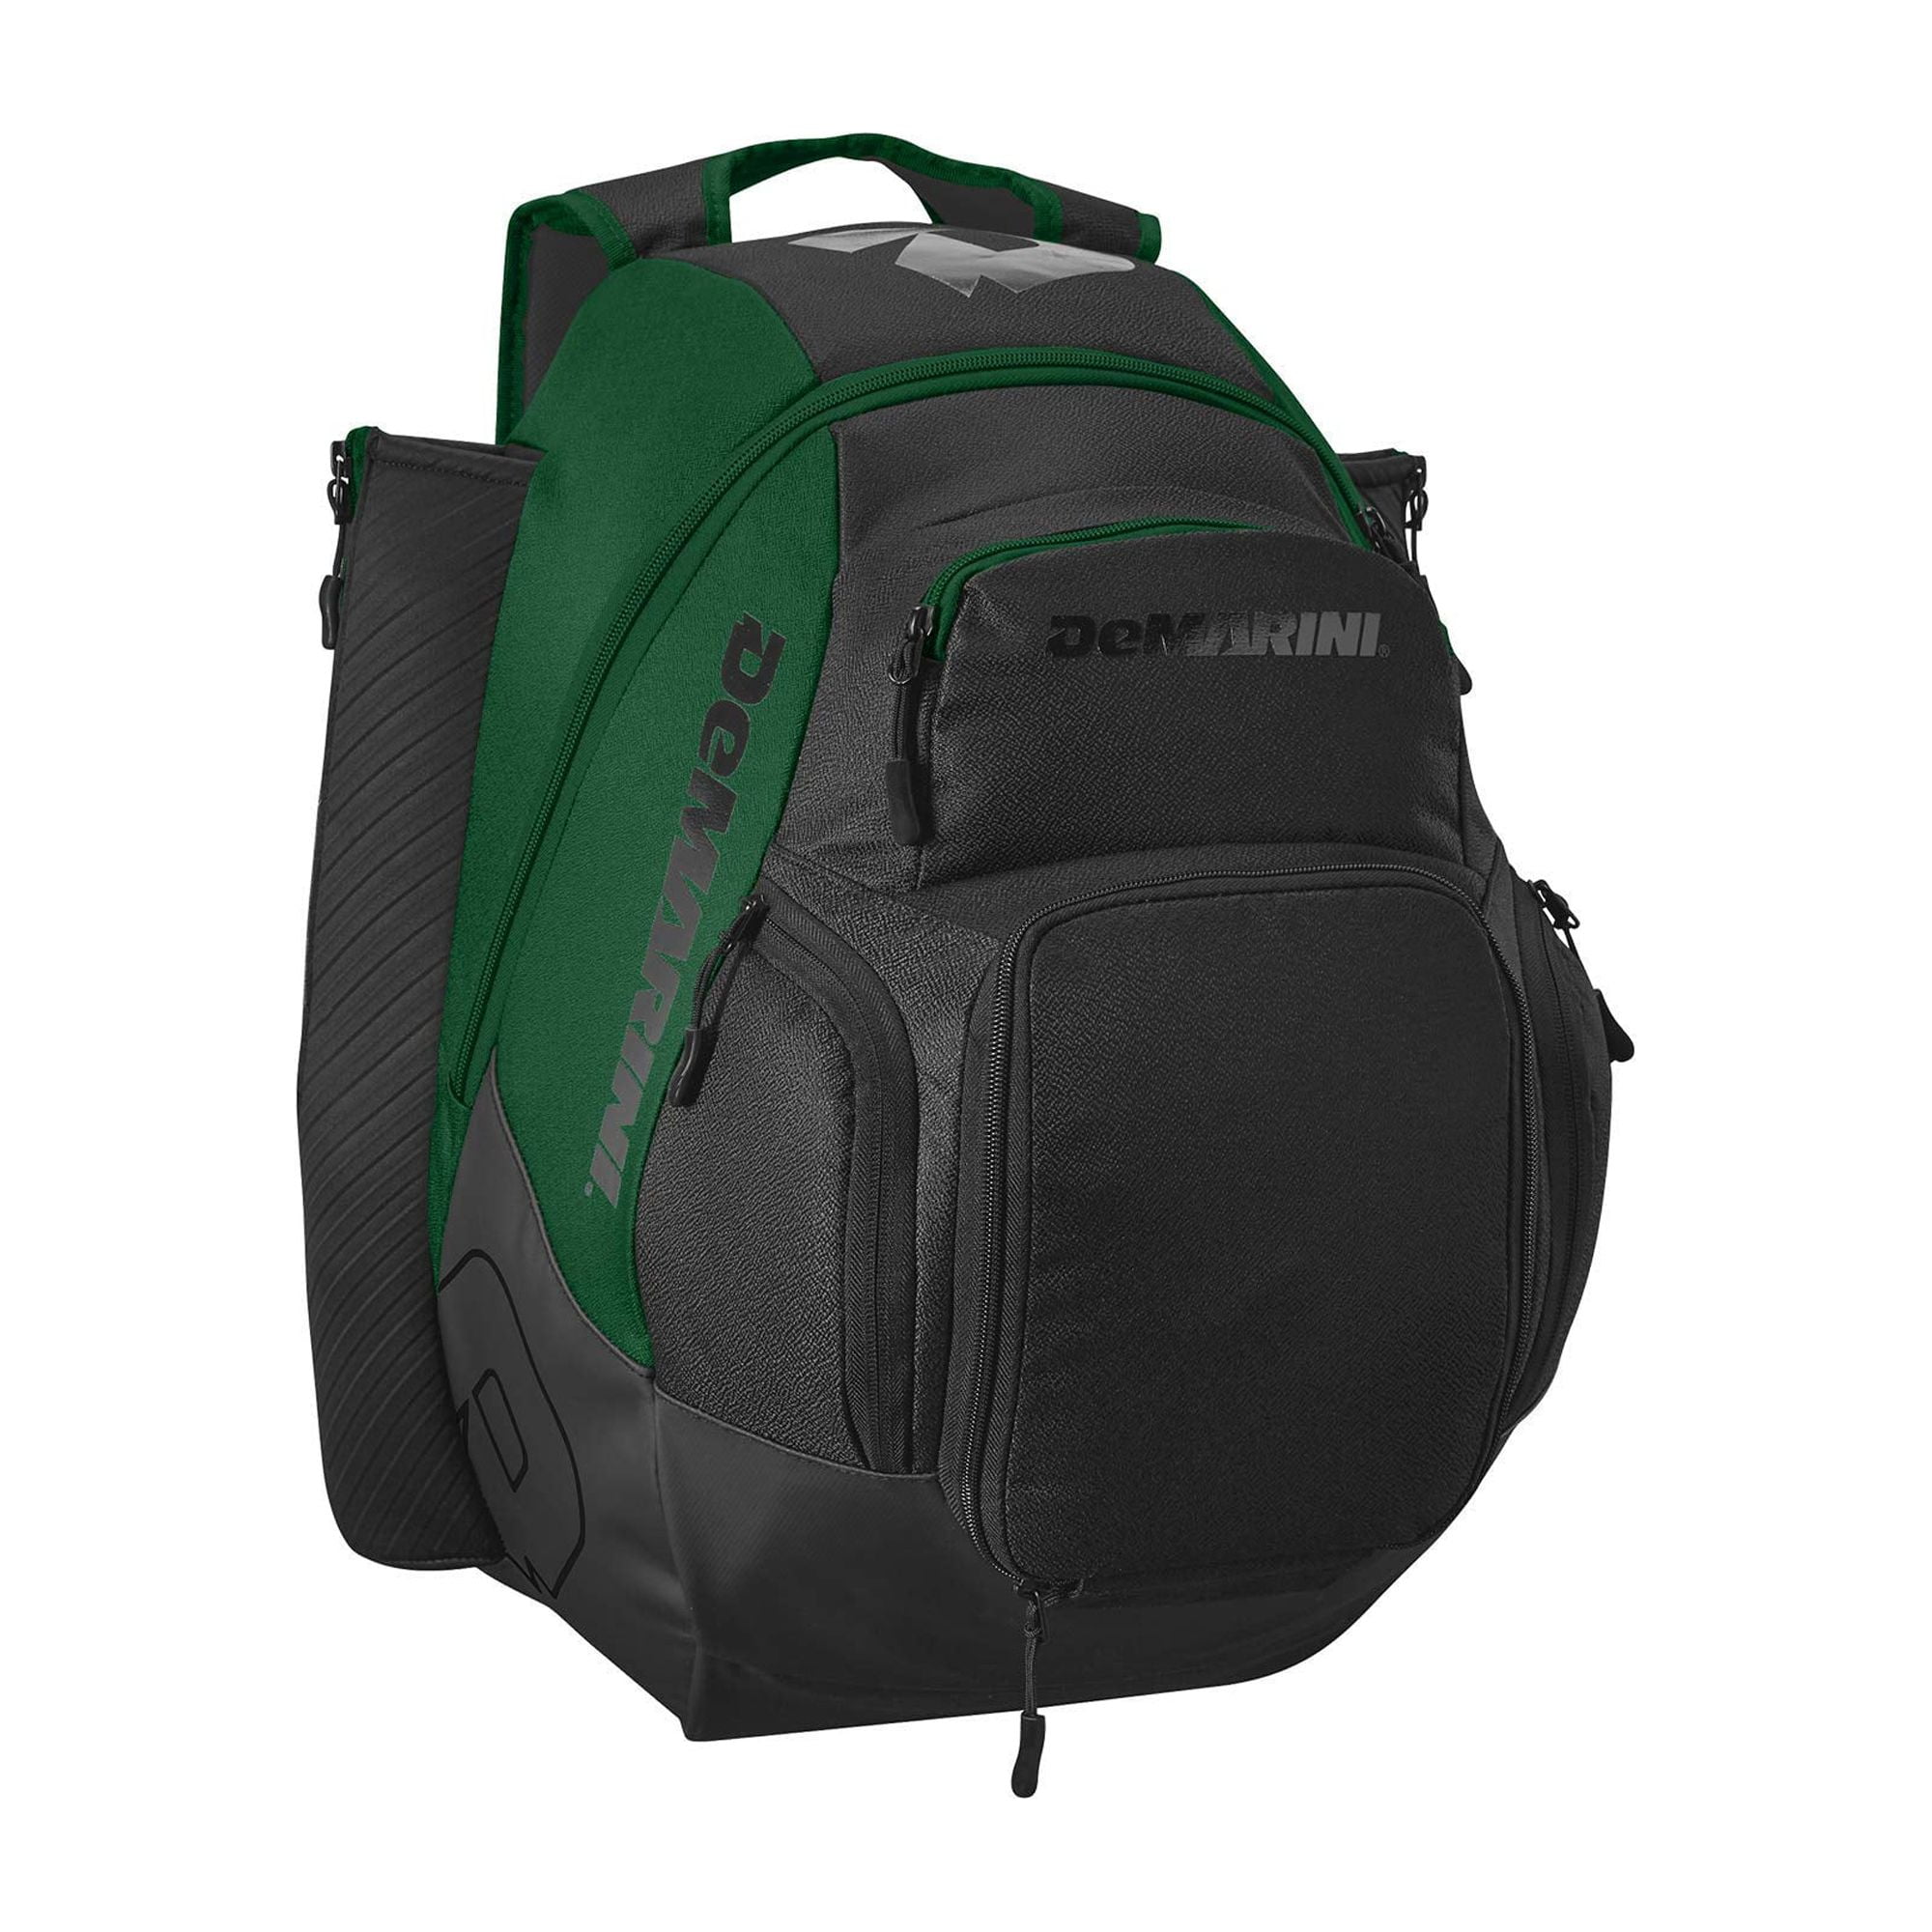 DeMarini Spectre Backpack - Baseball & Softball Players Equipment Bag  WB571760 | eBay